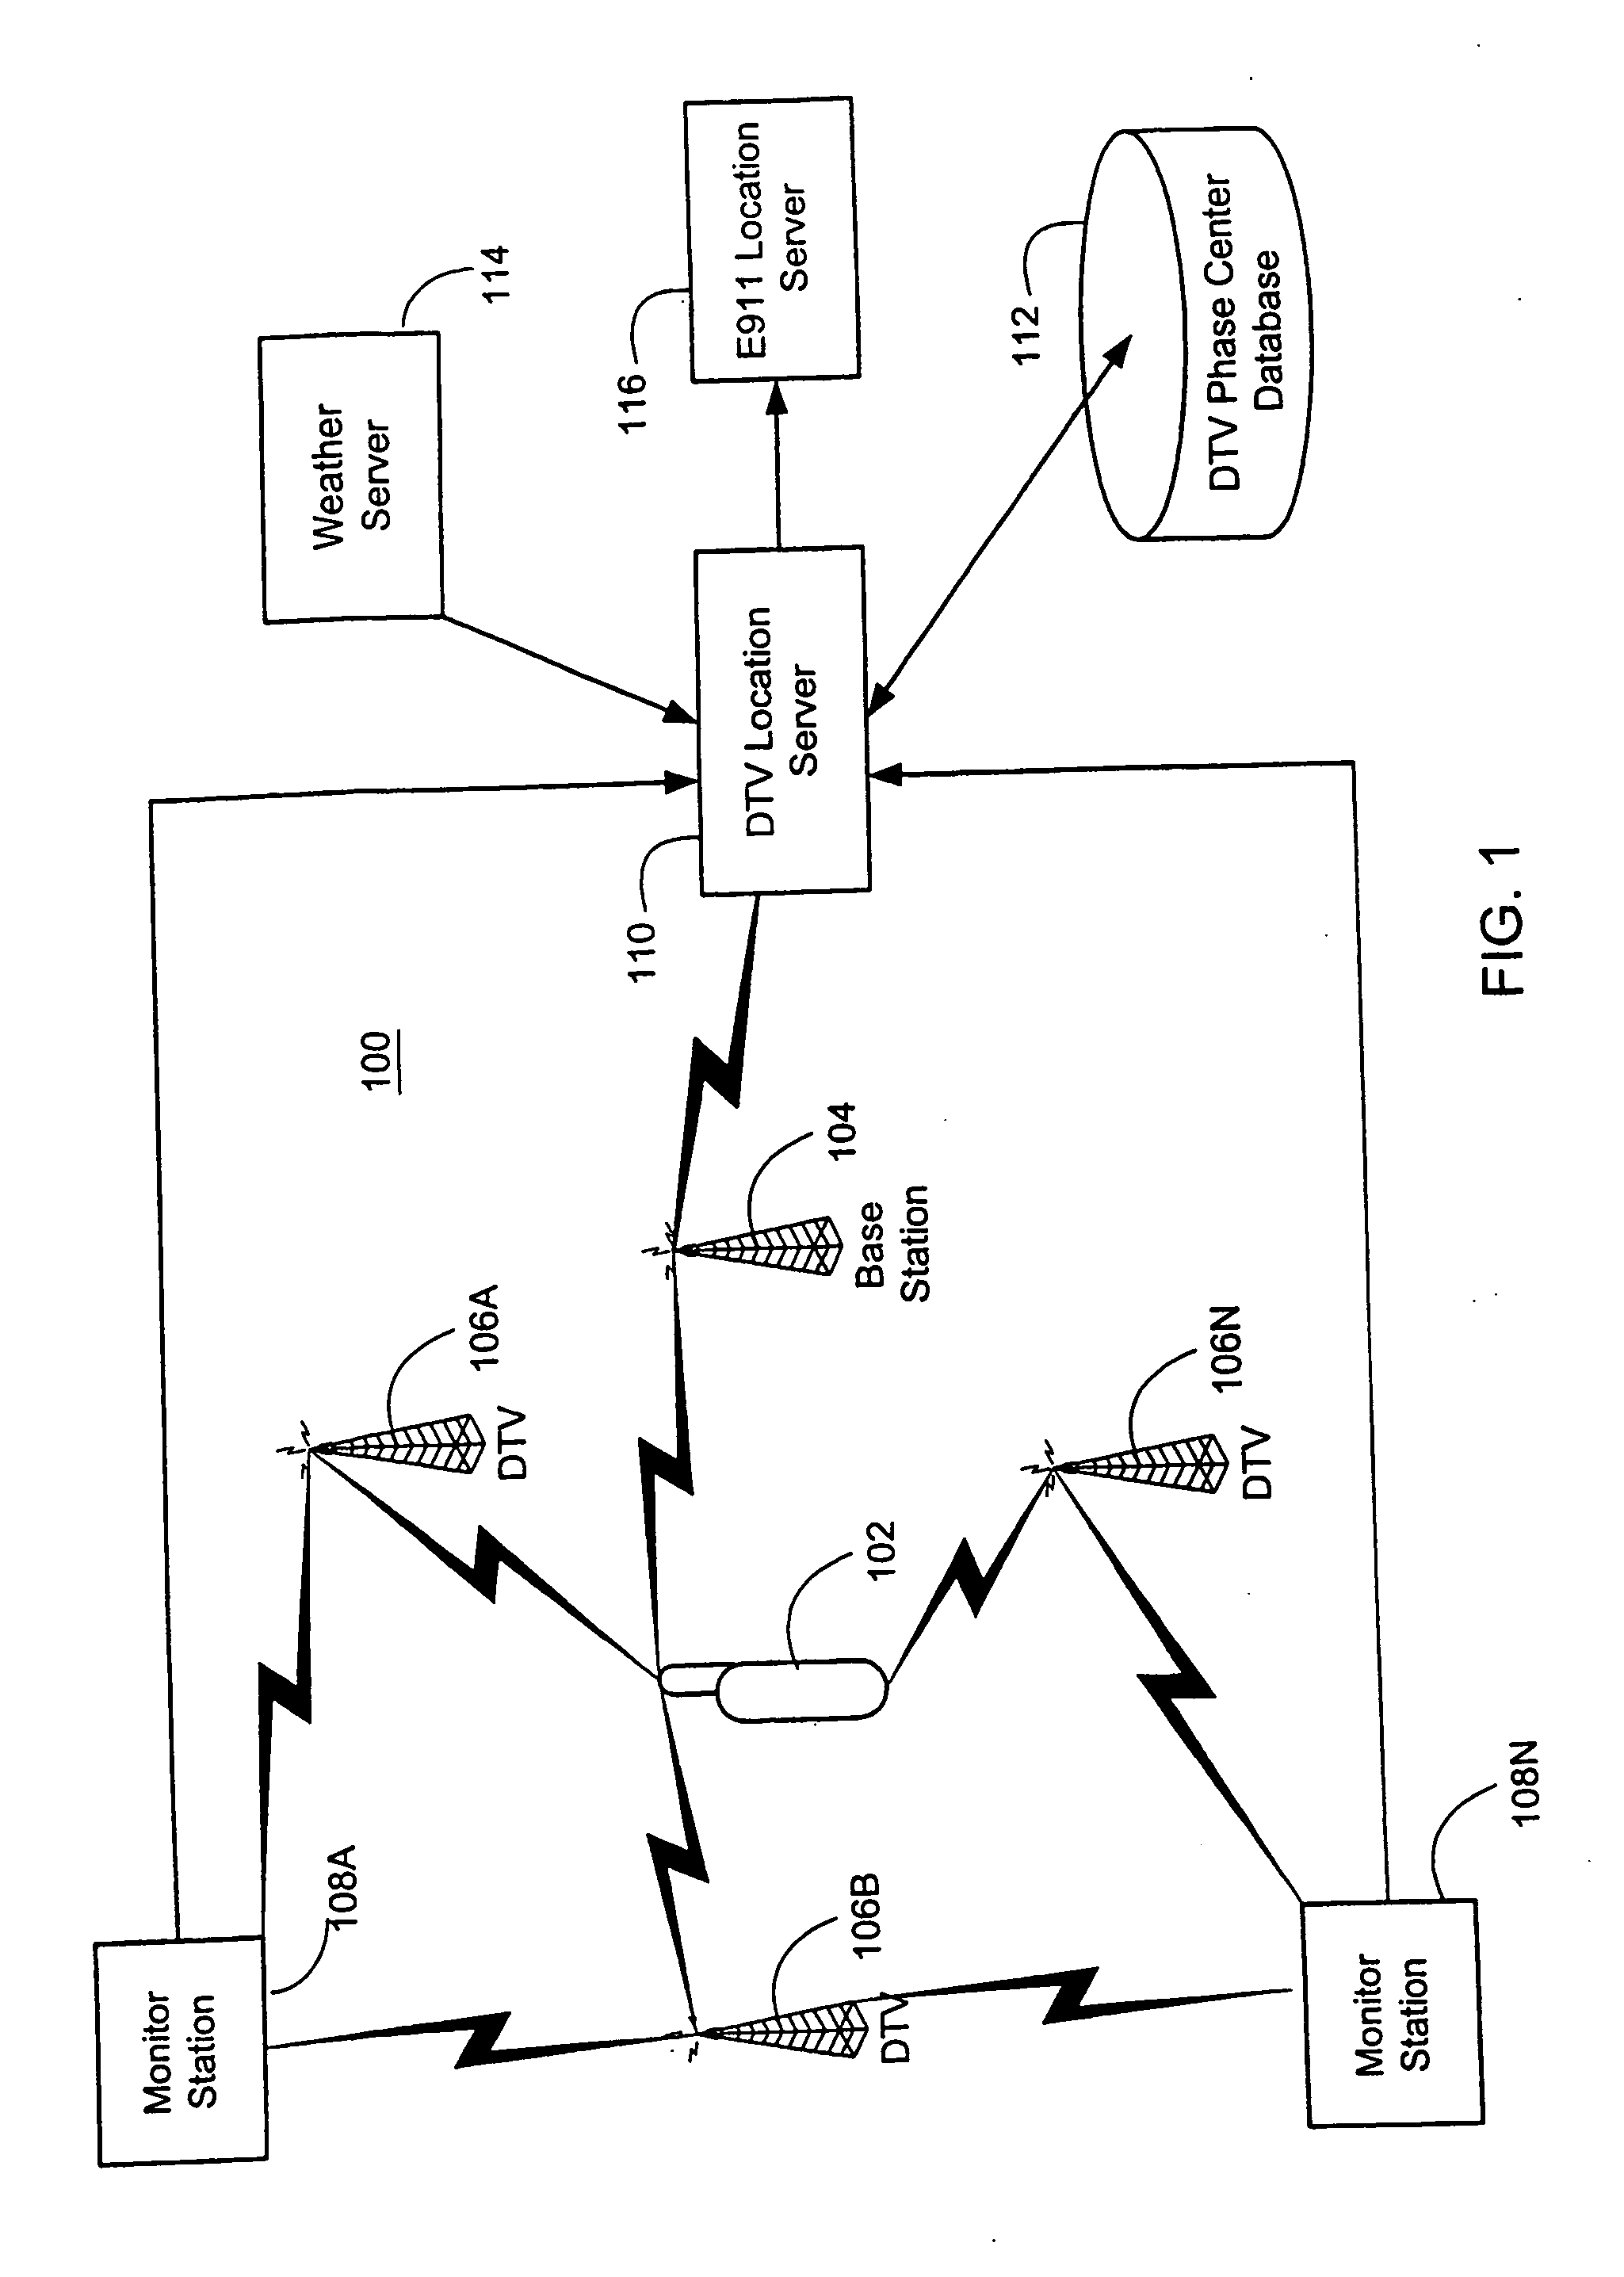 Position location using broadcast digital television signals